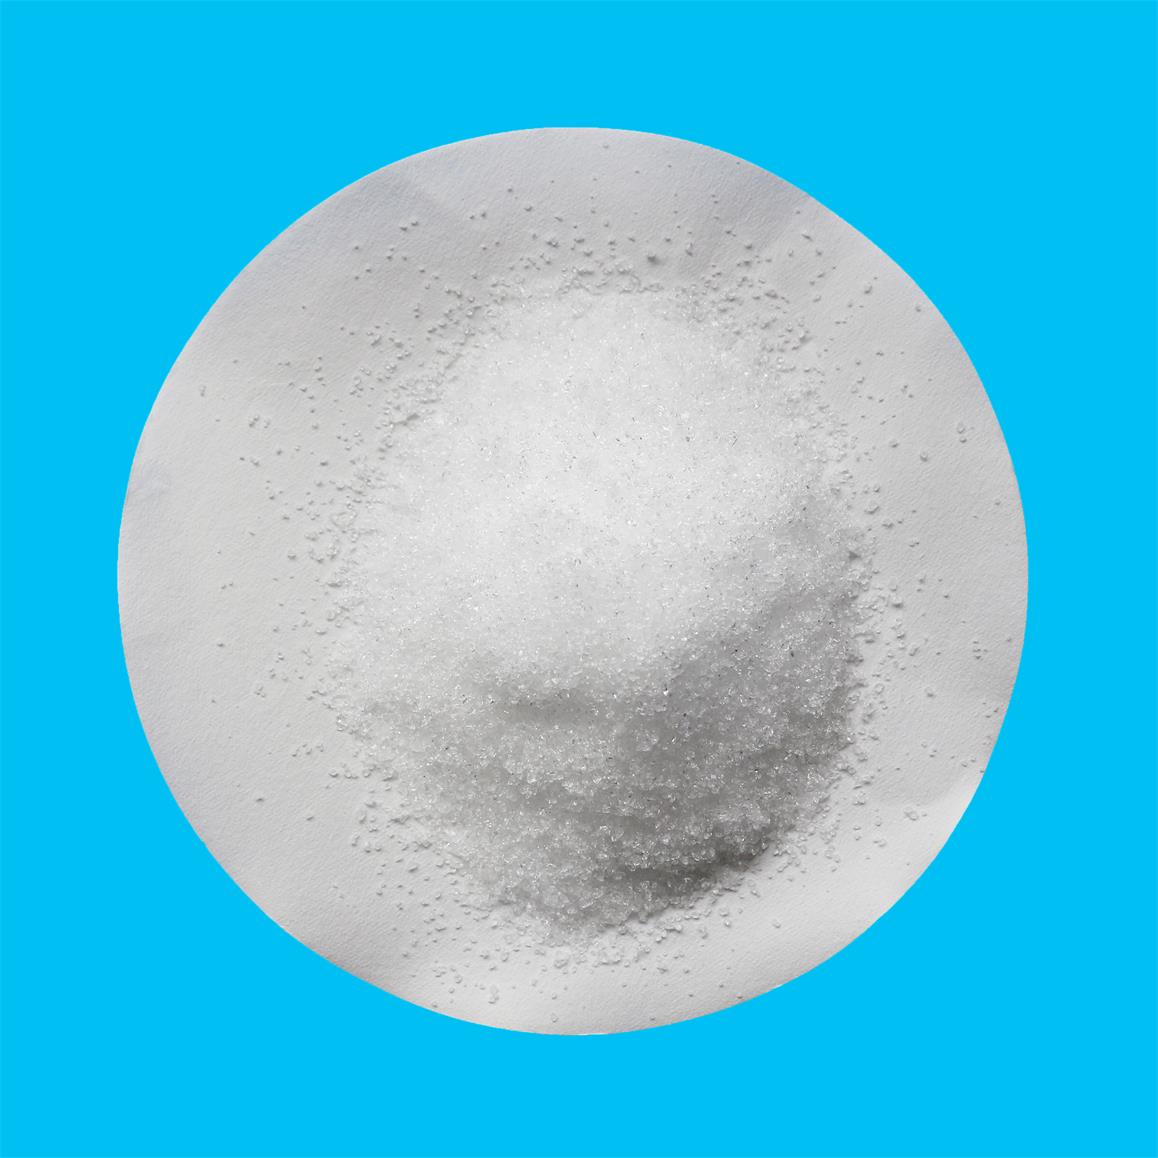 工业级食品级试剂级磷酸氢二钠二水合物,technical grade food grade reagent grade disodium phosphate dihydrate